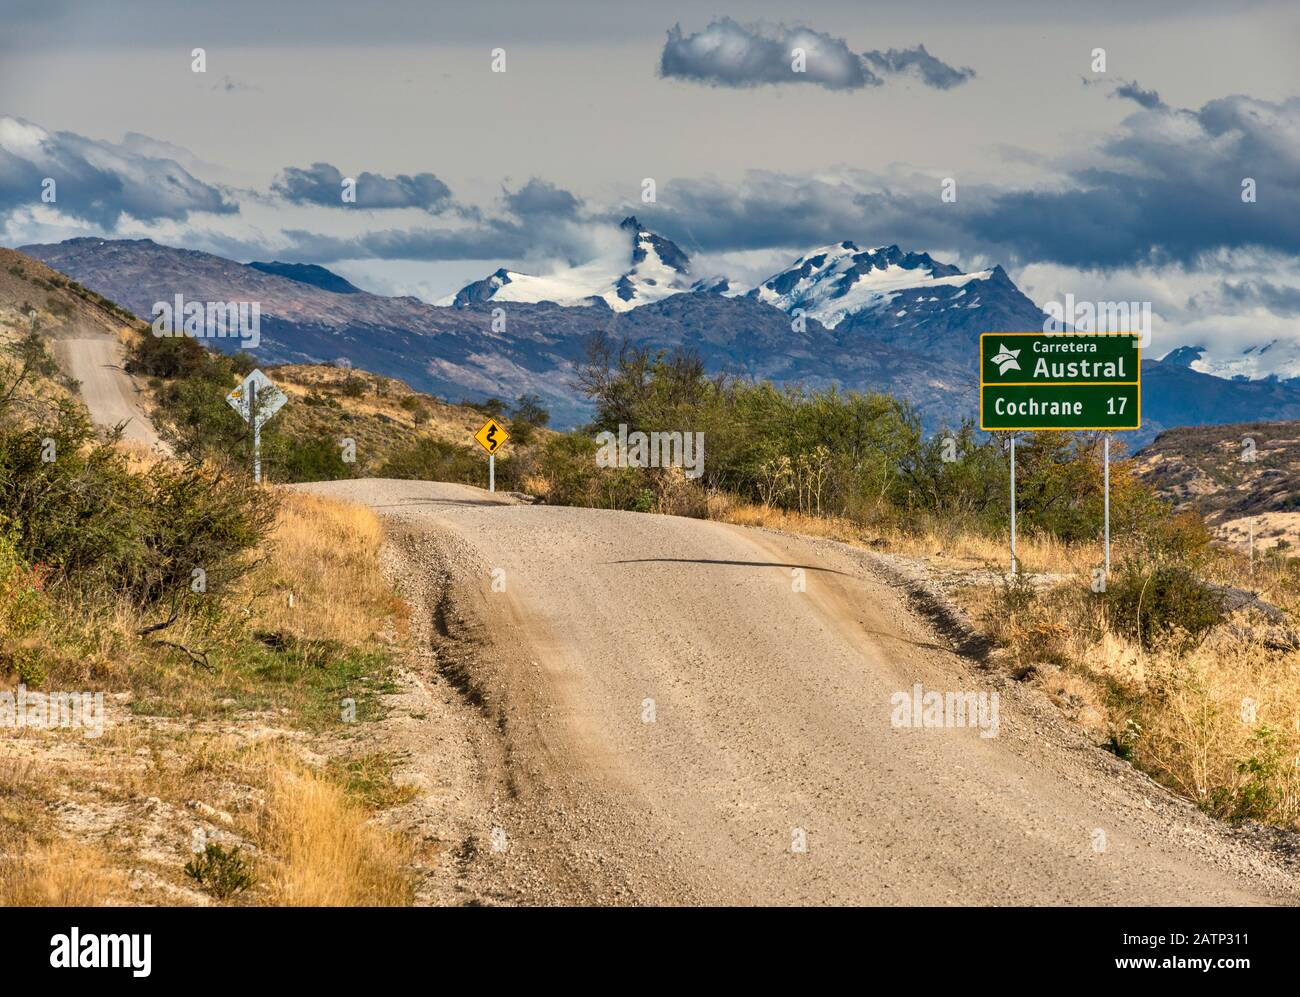 Carretera Austral, Chacabuco Valley area, future Patagonia National Park, near Cochrane, Chile Stock Photo